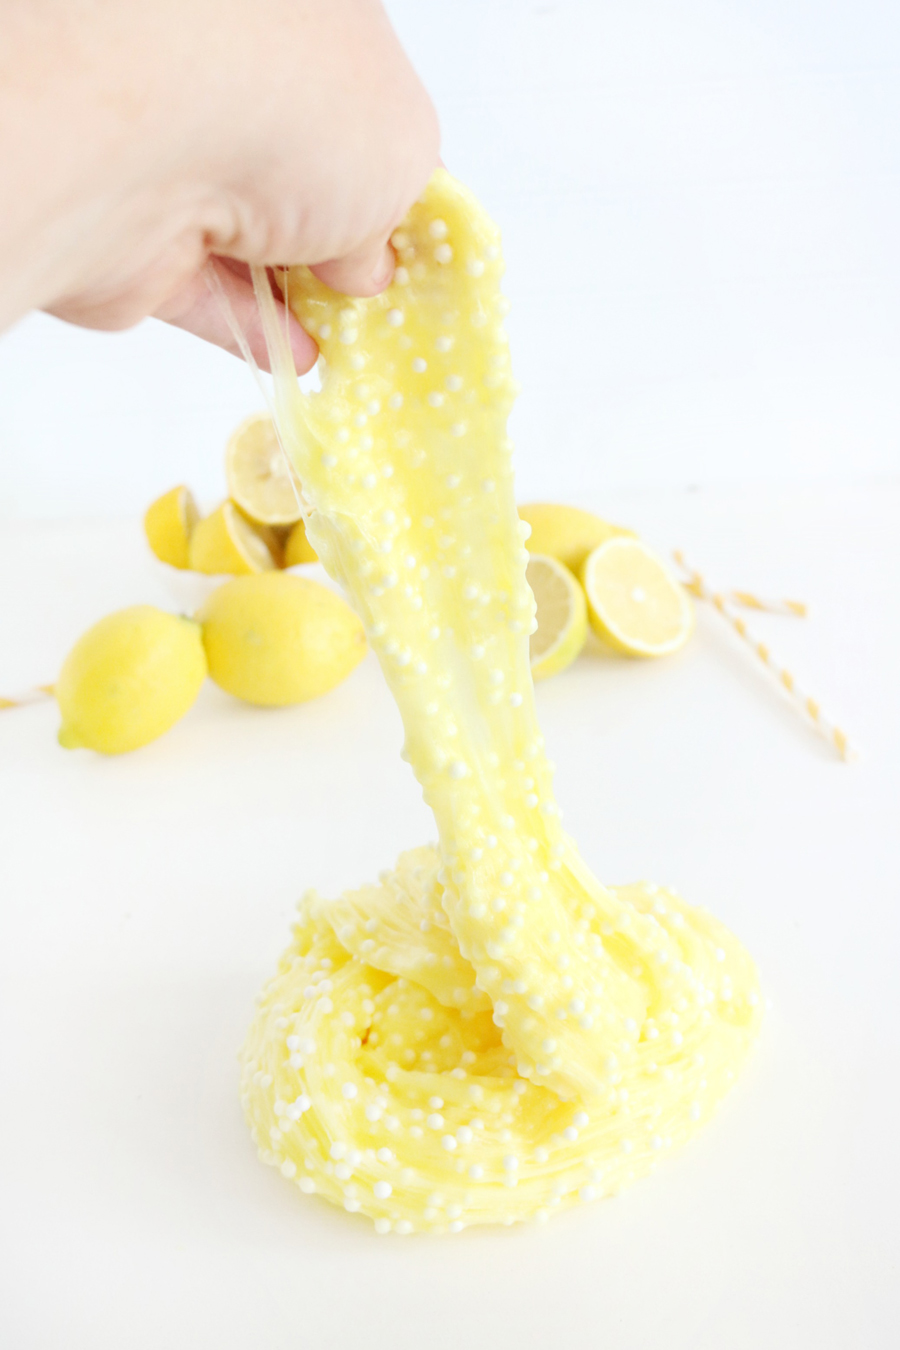 Super Stretchy Lemonade Scented Floam Slime